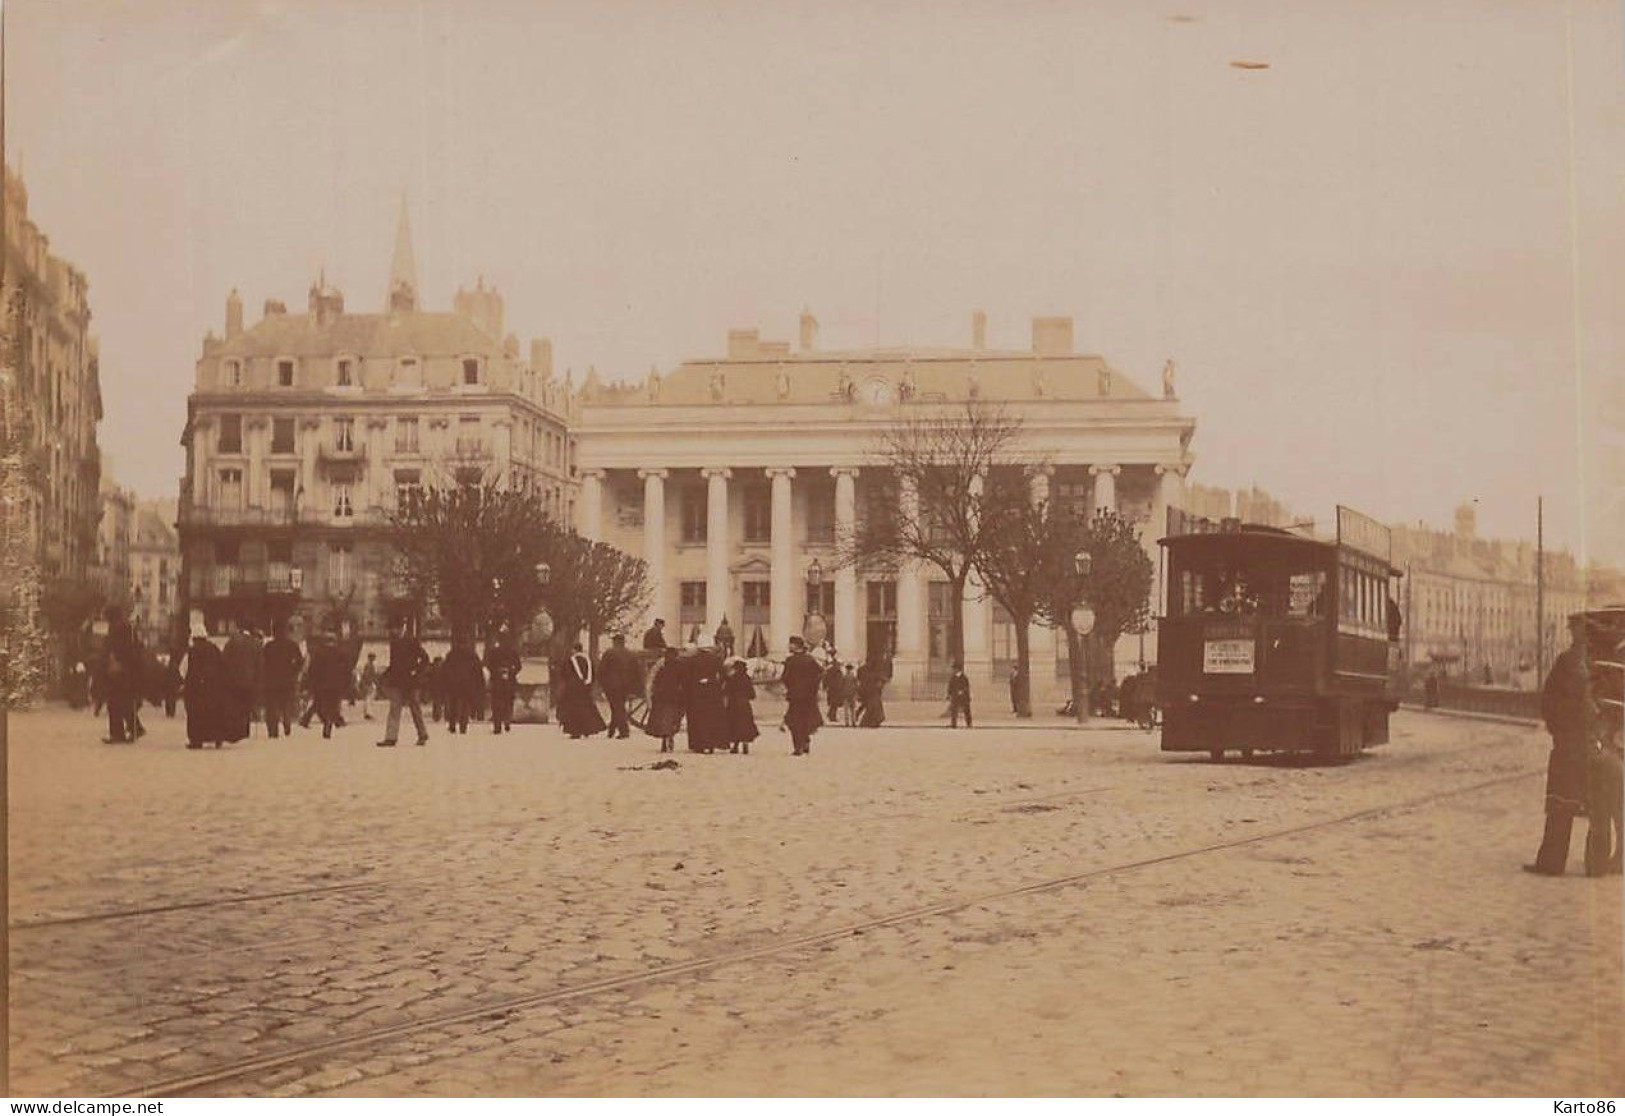 Nantes * Le Tramway Tram * Place De La Bourse * Photo Ancienne Circa 1890/1910 * 10.8x7.8cm - Nantes